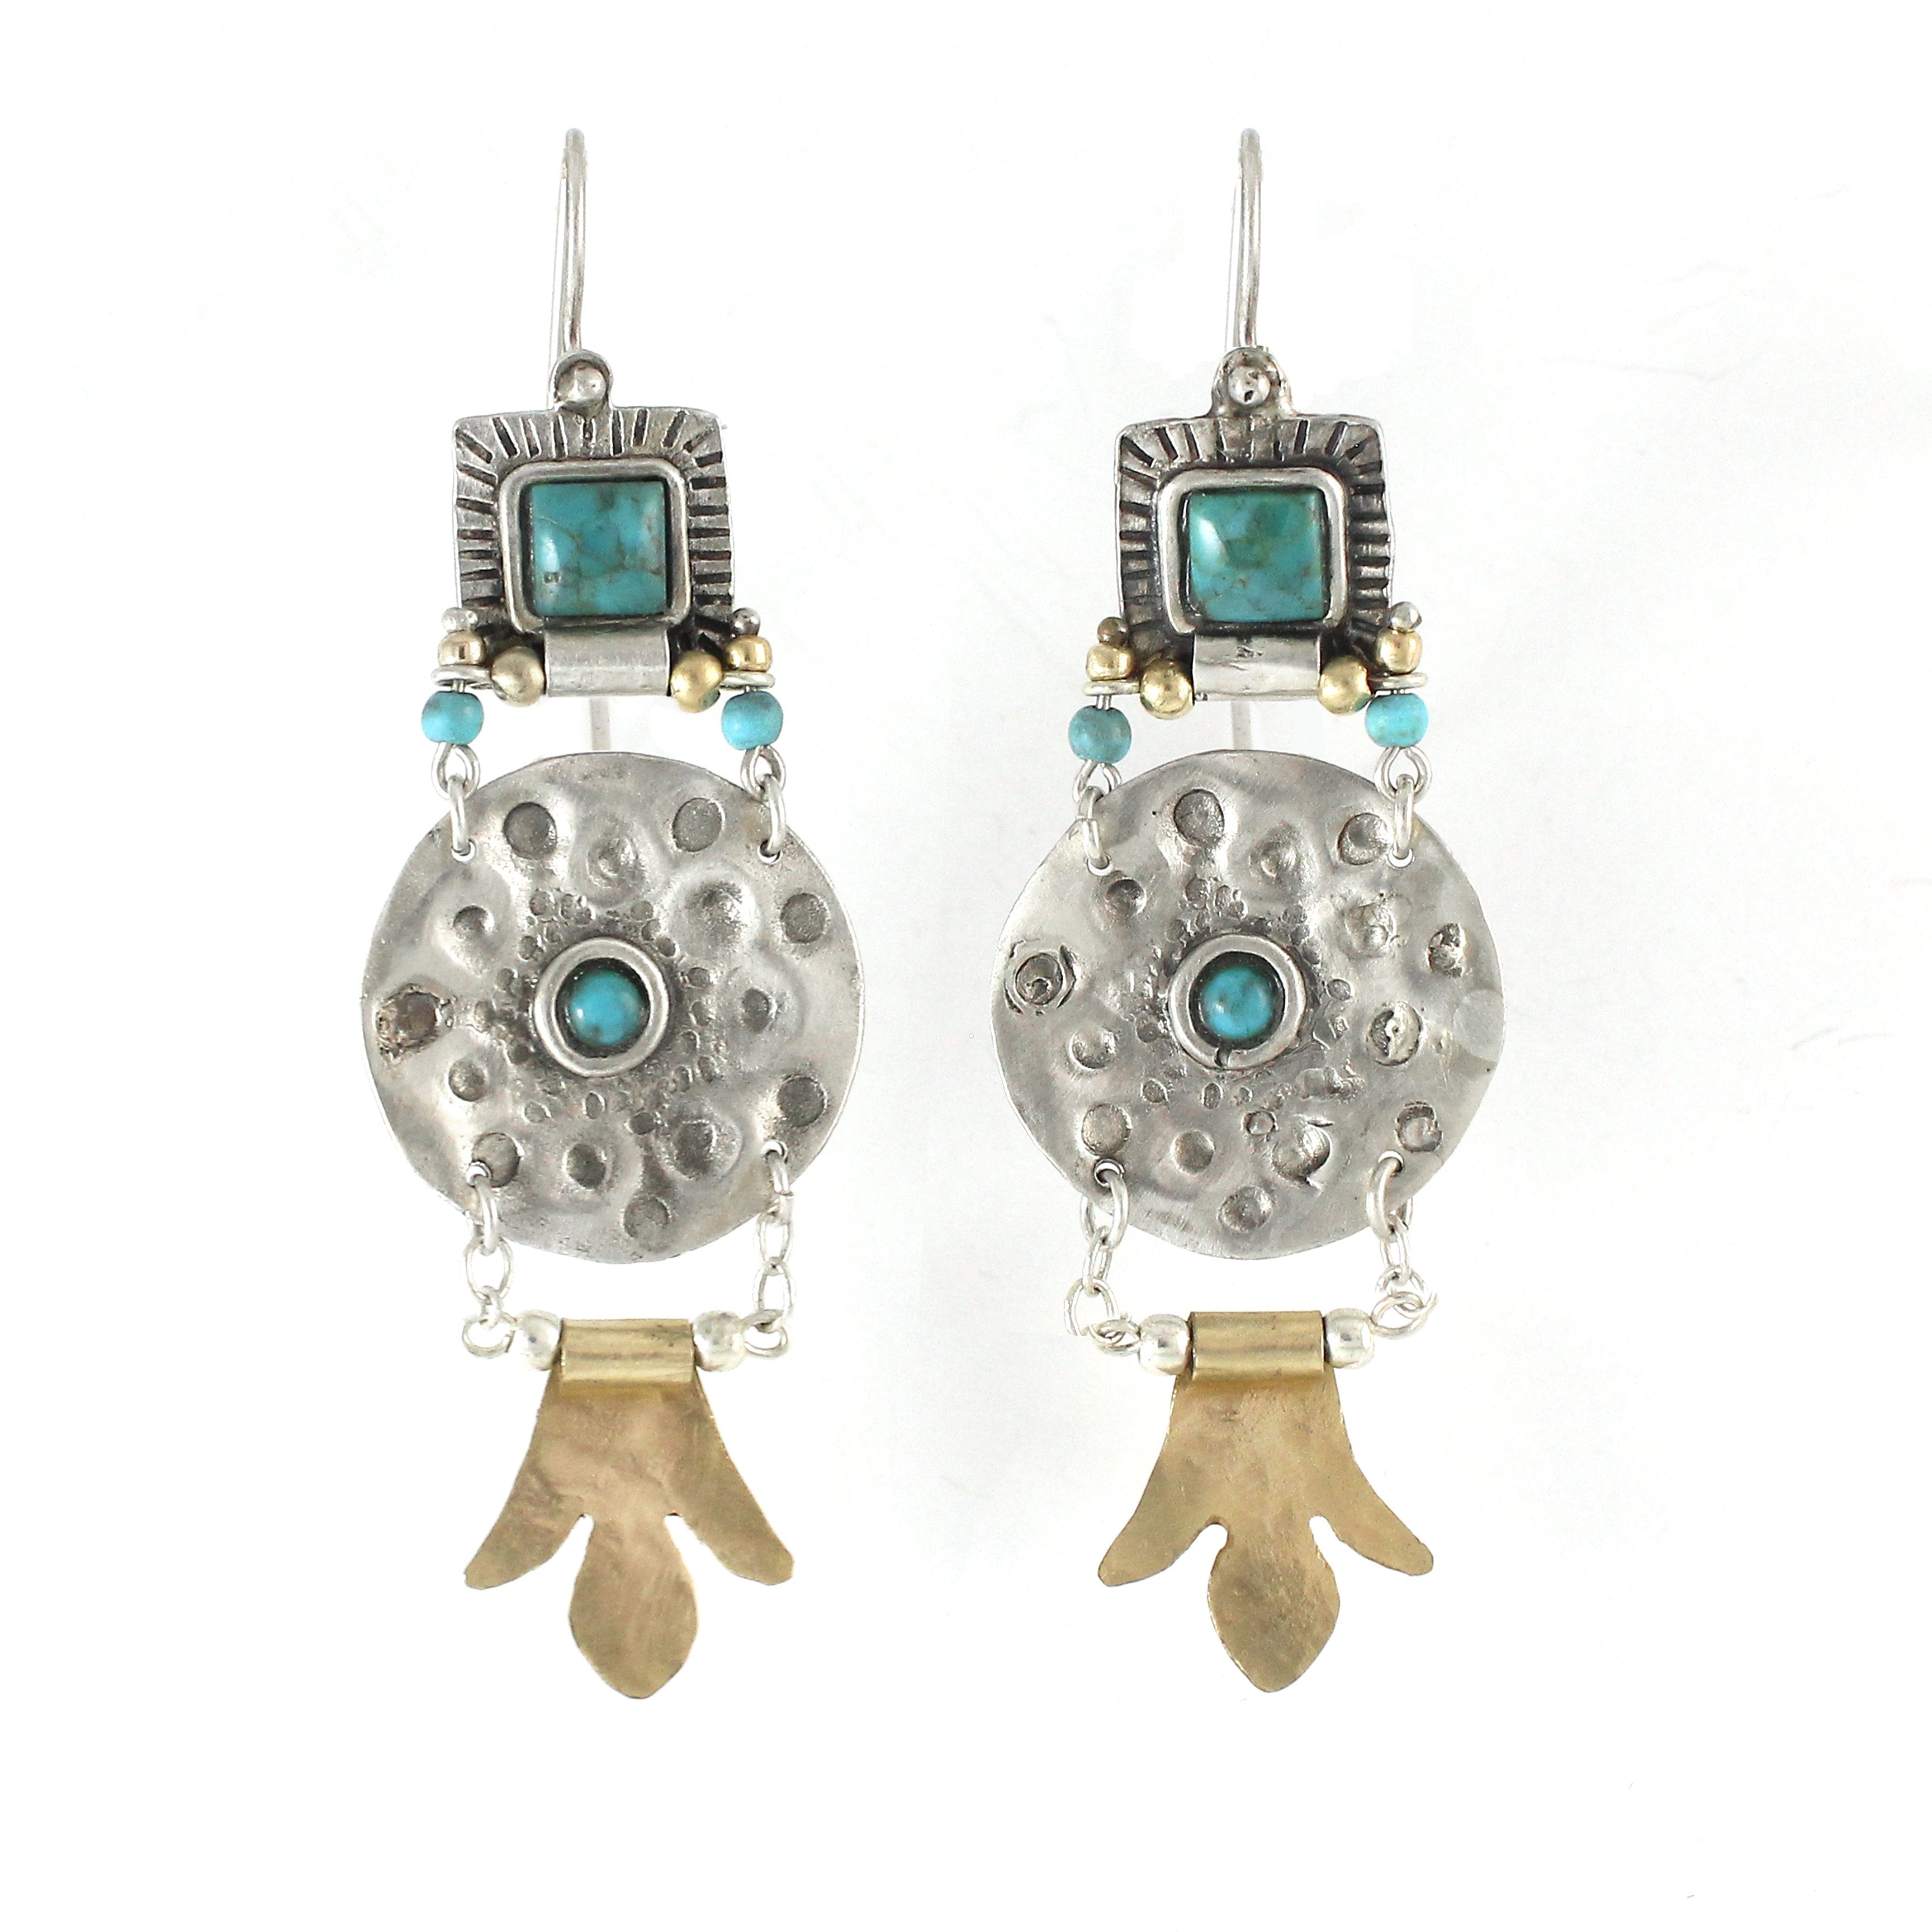 Silver & Gold filled & Turquoise Gemstone Earrings - Shulamit Kanter